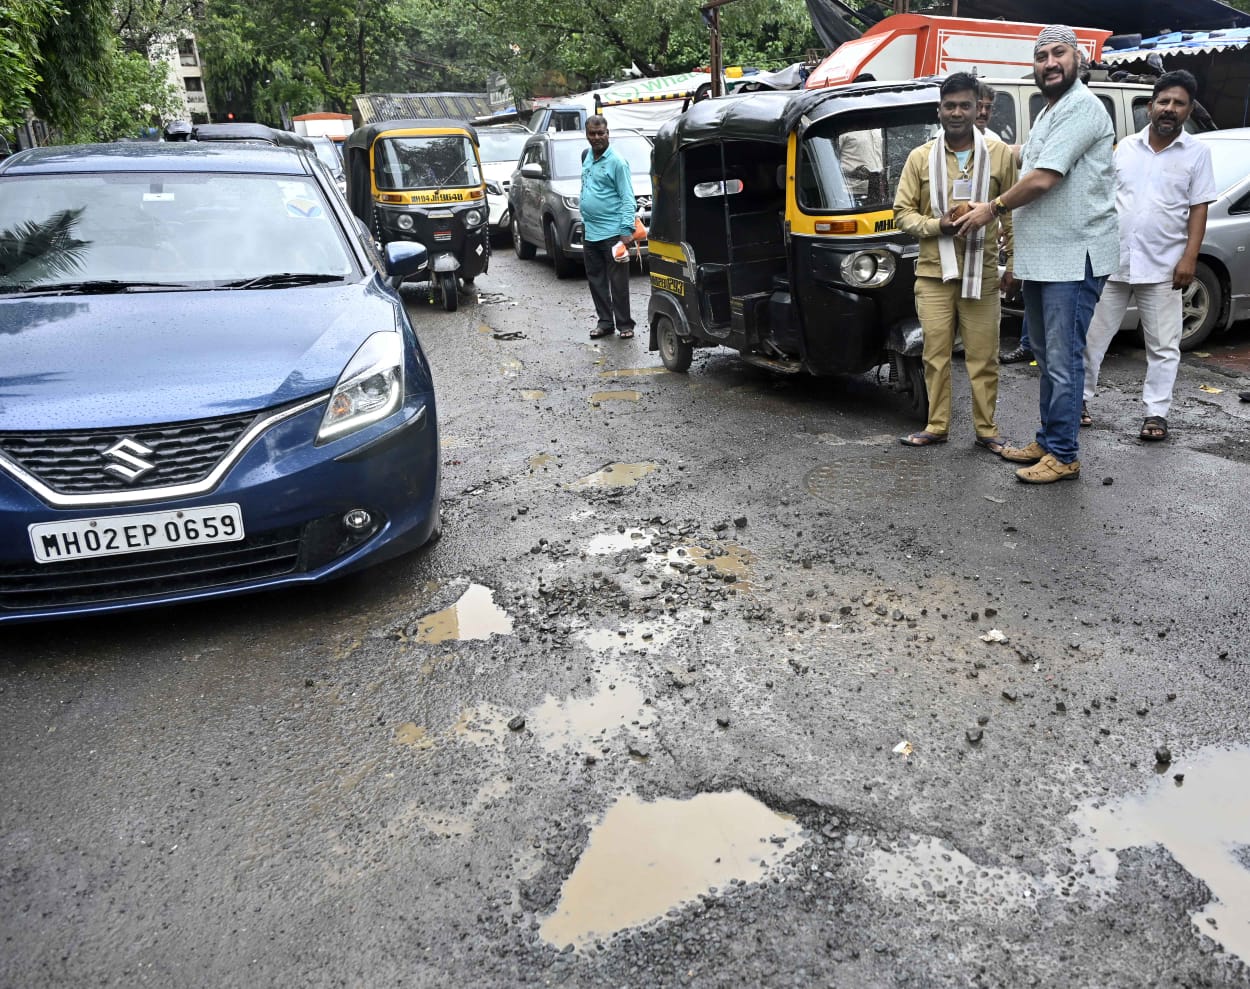 Chandivali Celebrates Courageous Motorists in Chandivali's Potholed Road Struggle